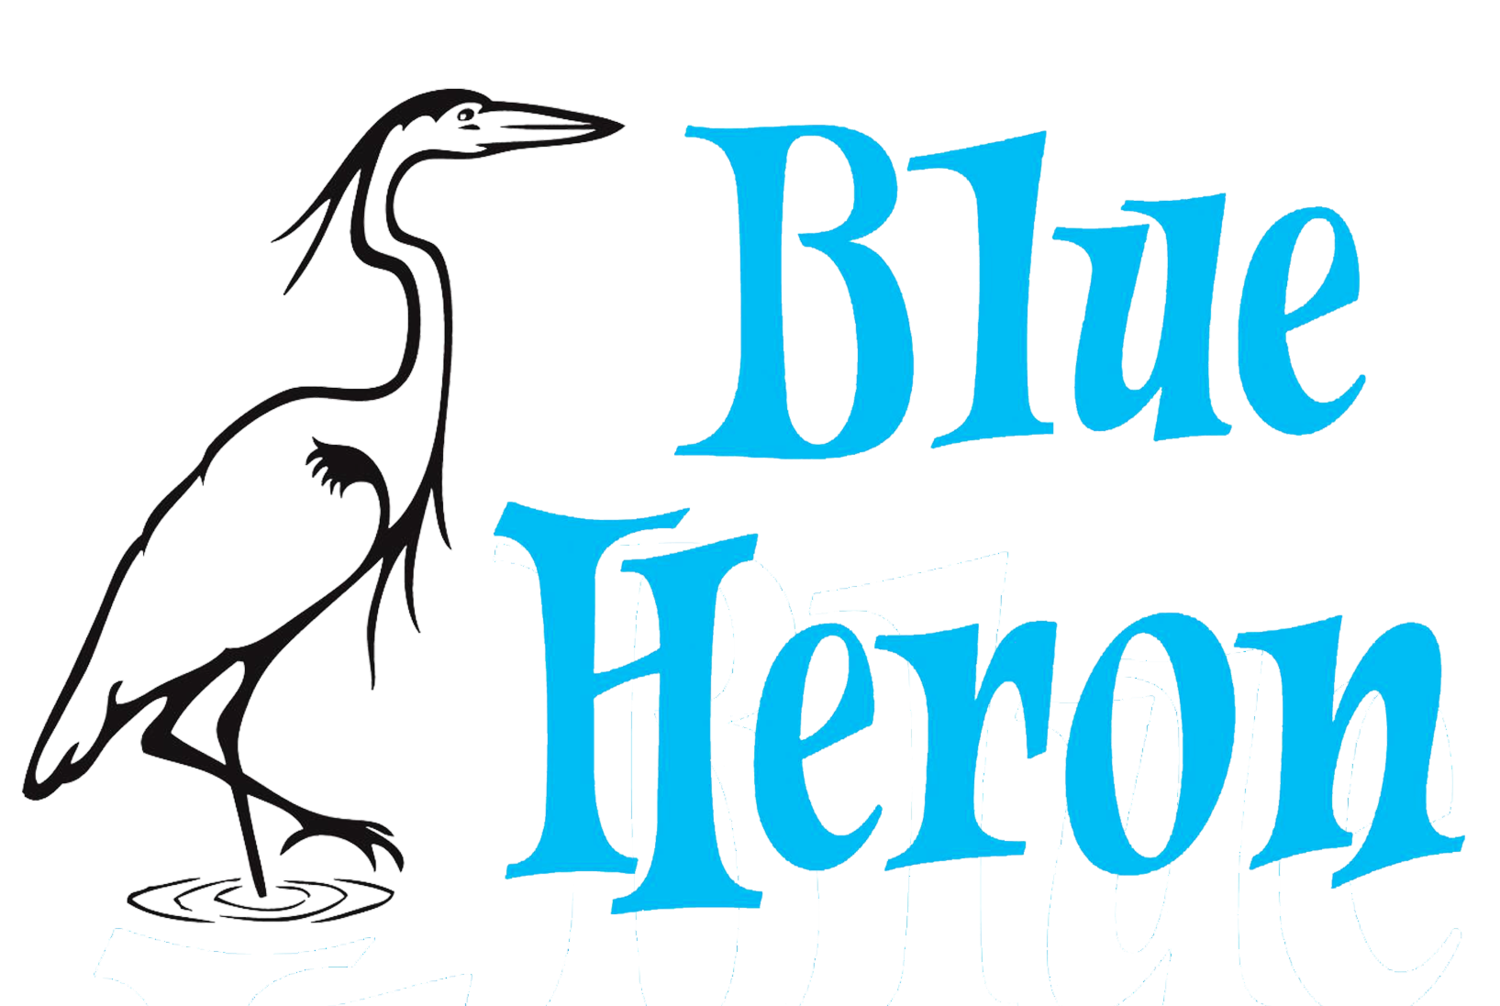 BLUE HERON